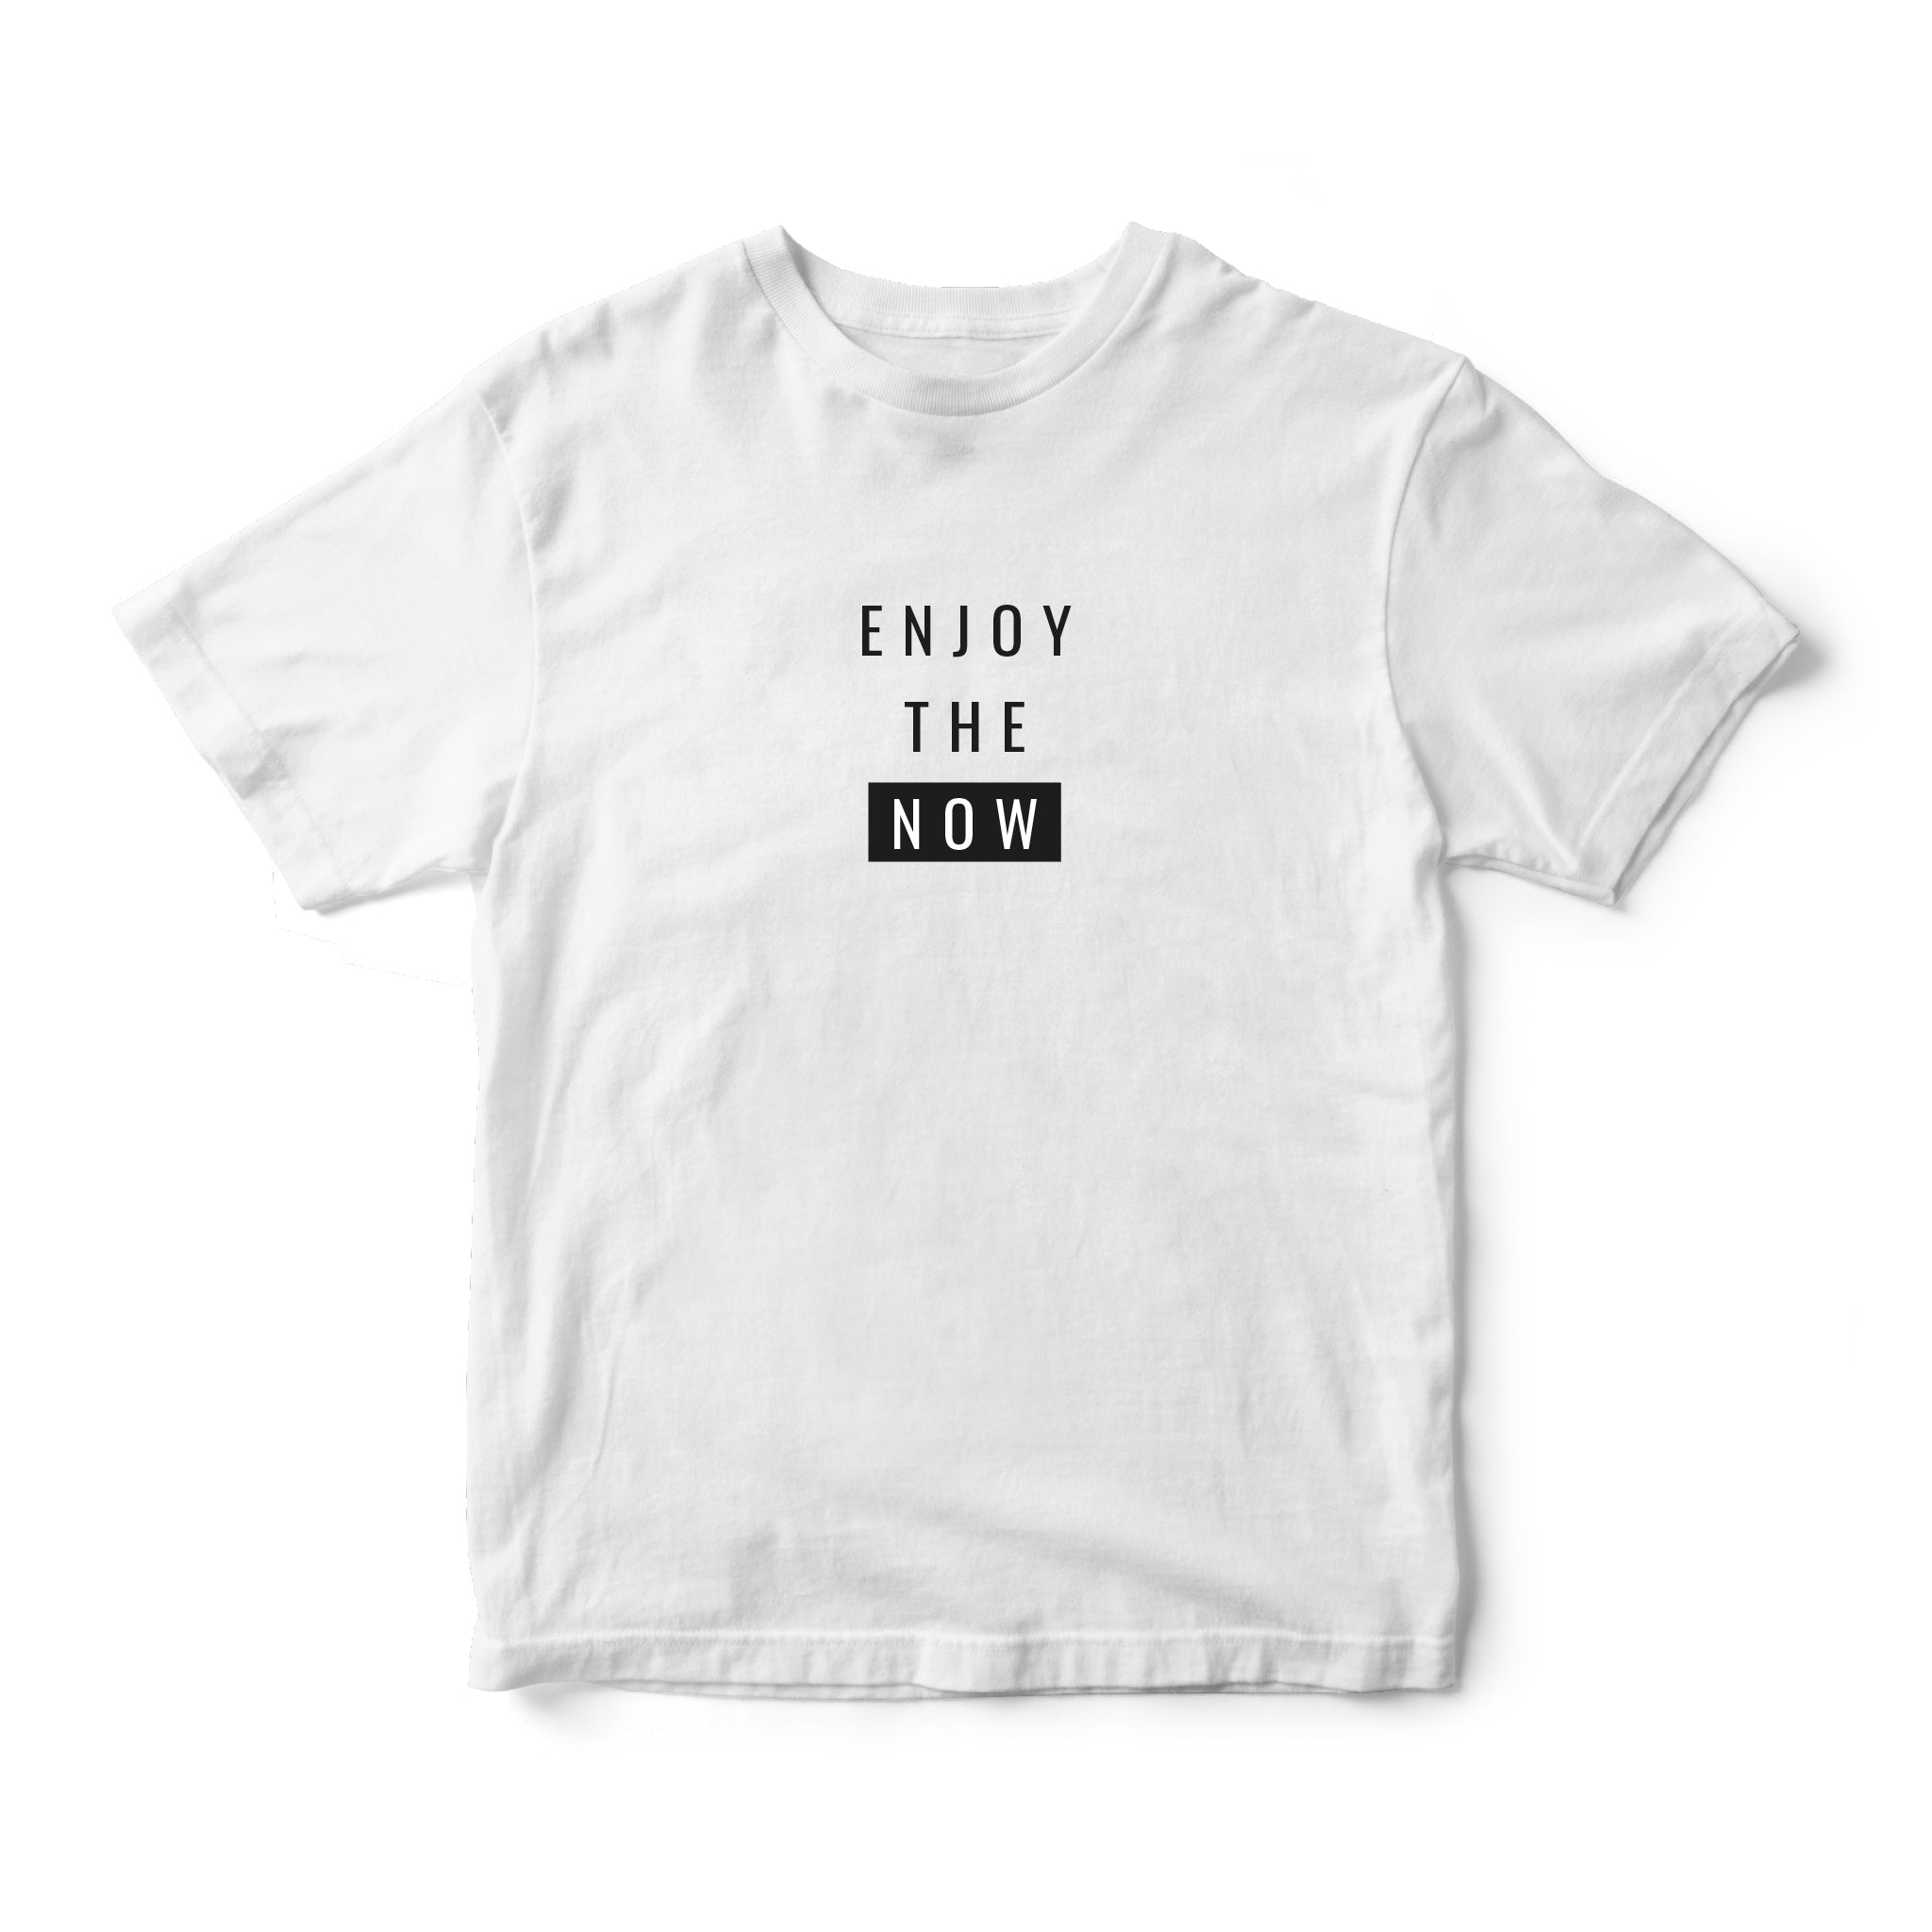 Instee Enjoy the Now T-shirt Unisex 100% Cotton